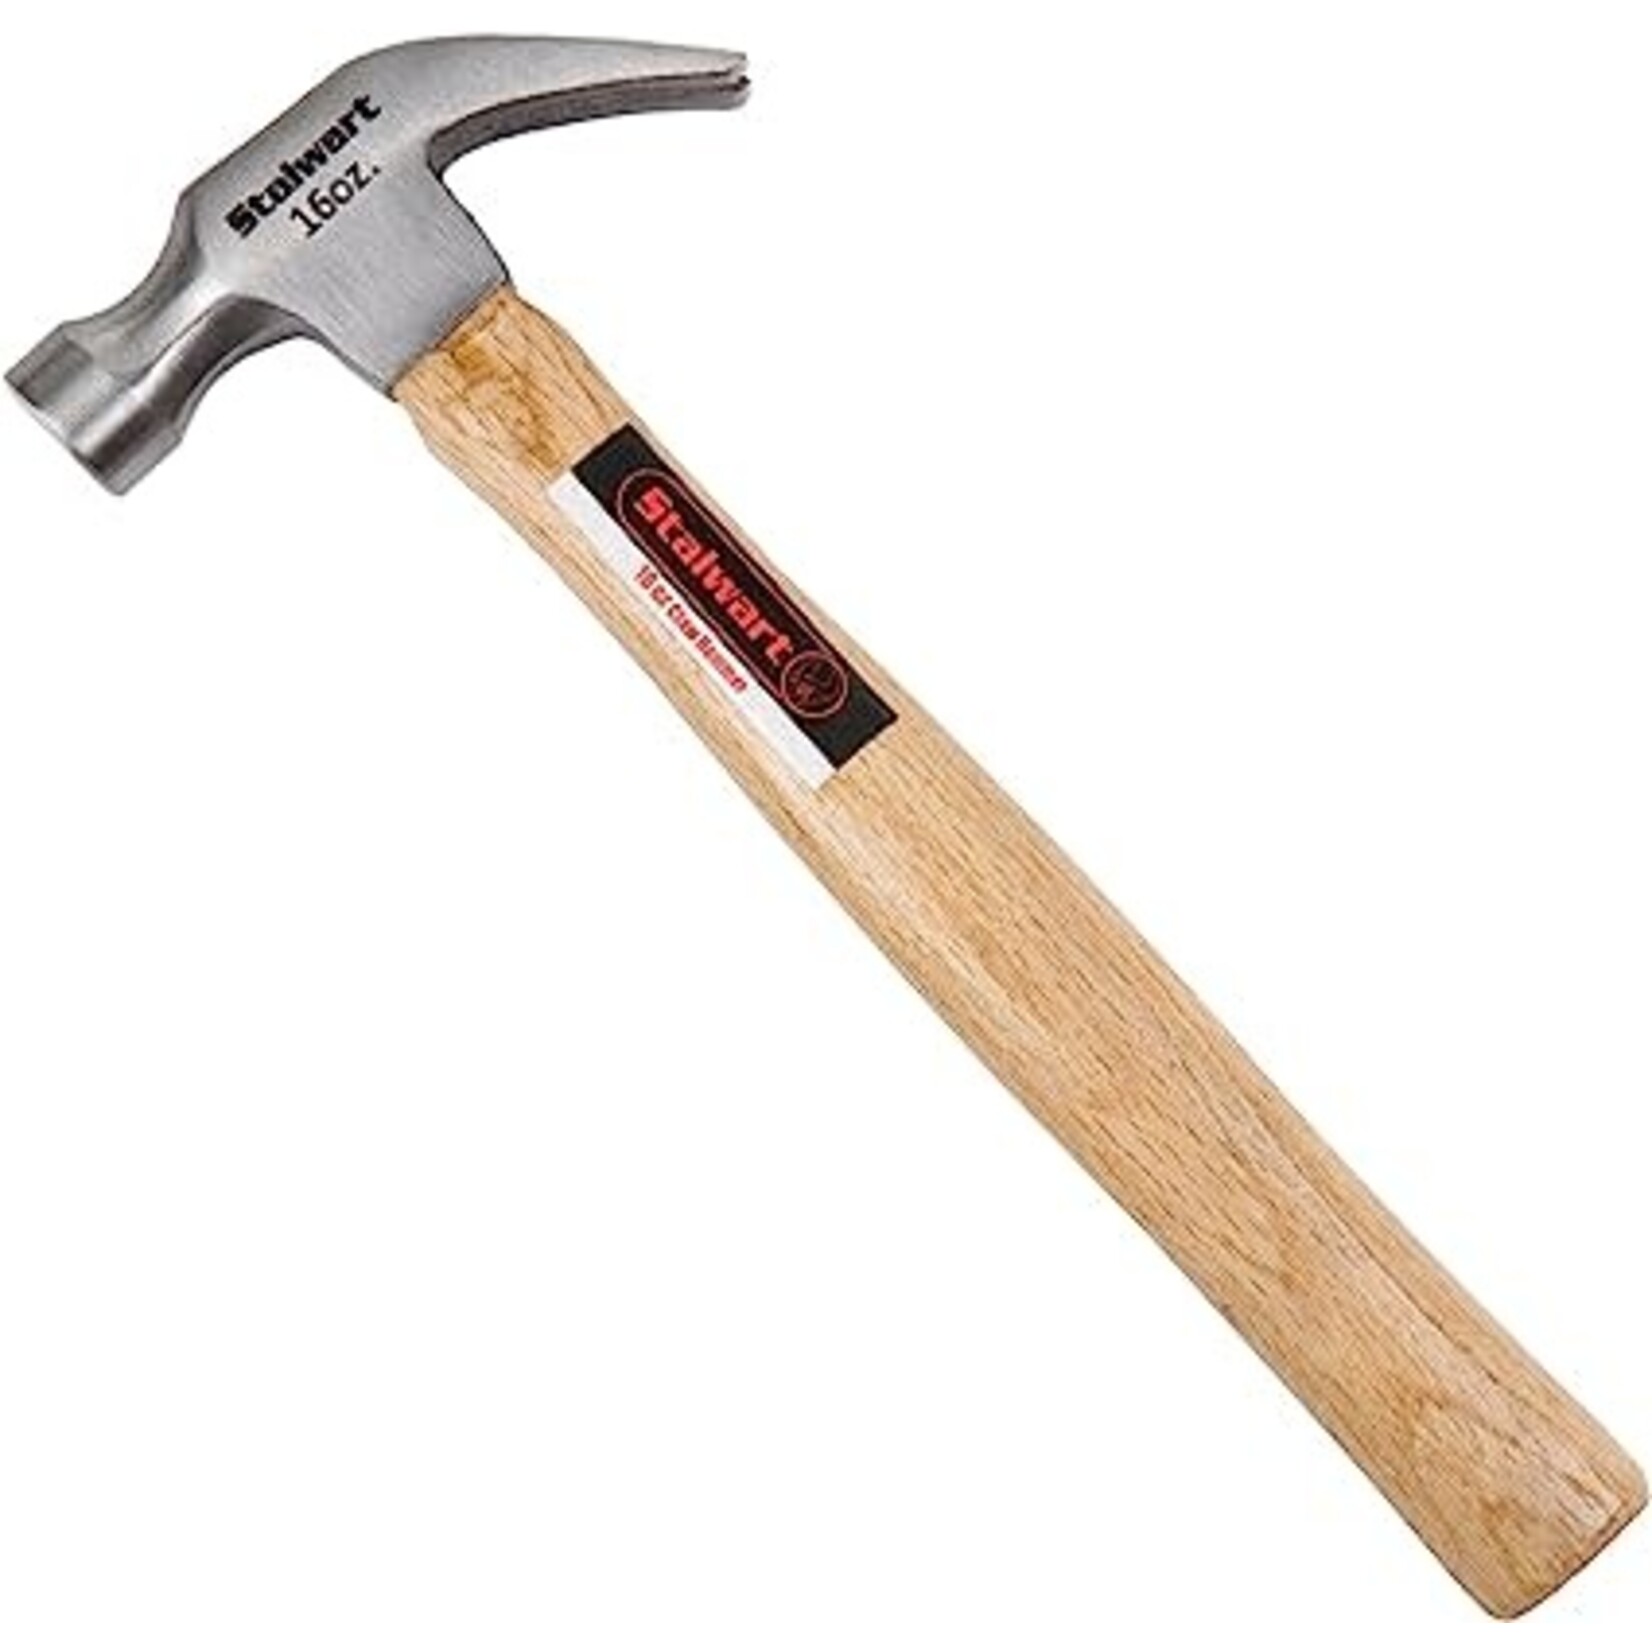 Claw Hammer 16 0z